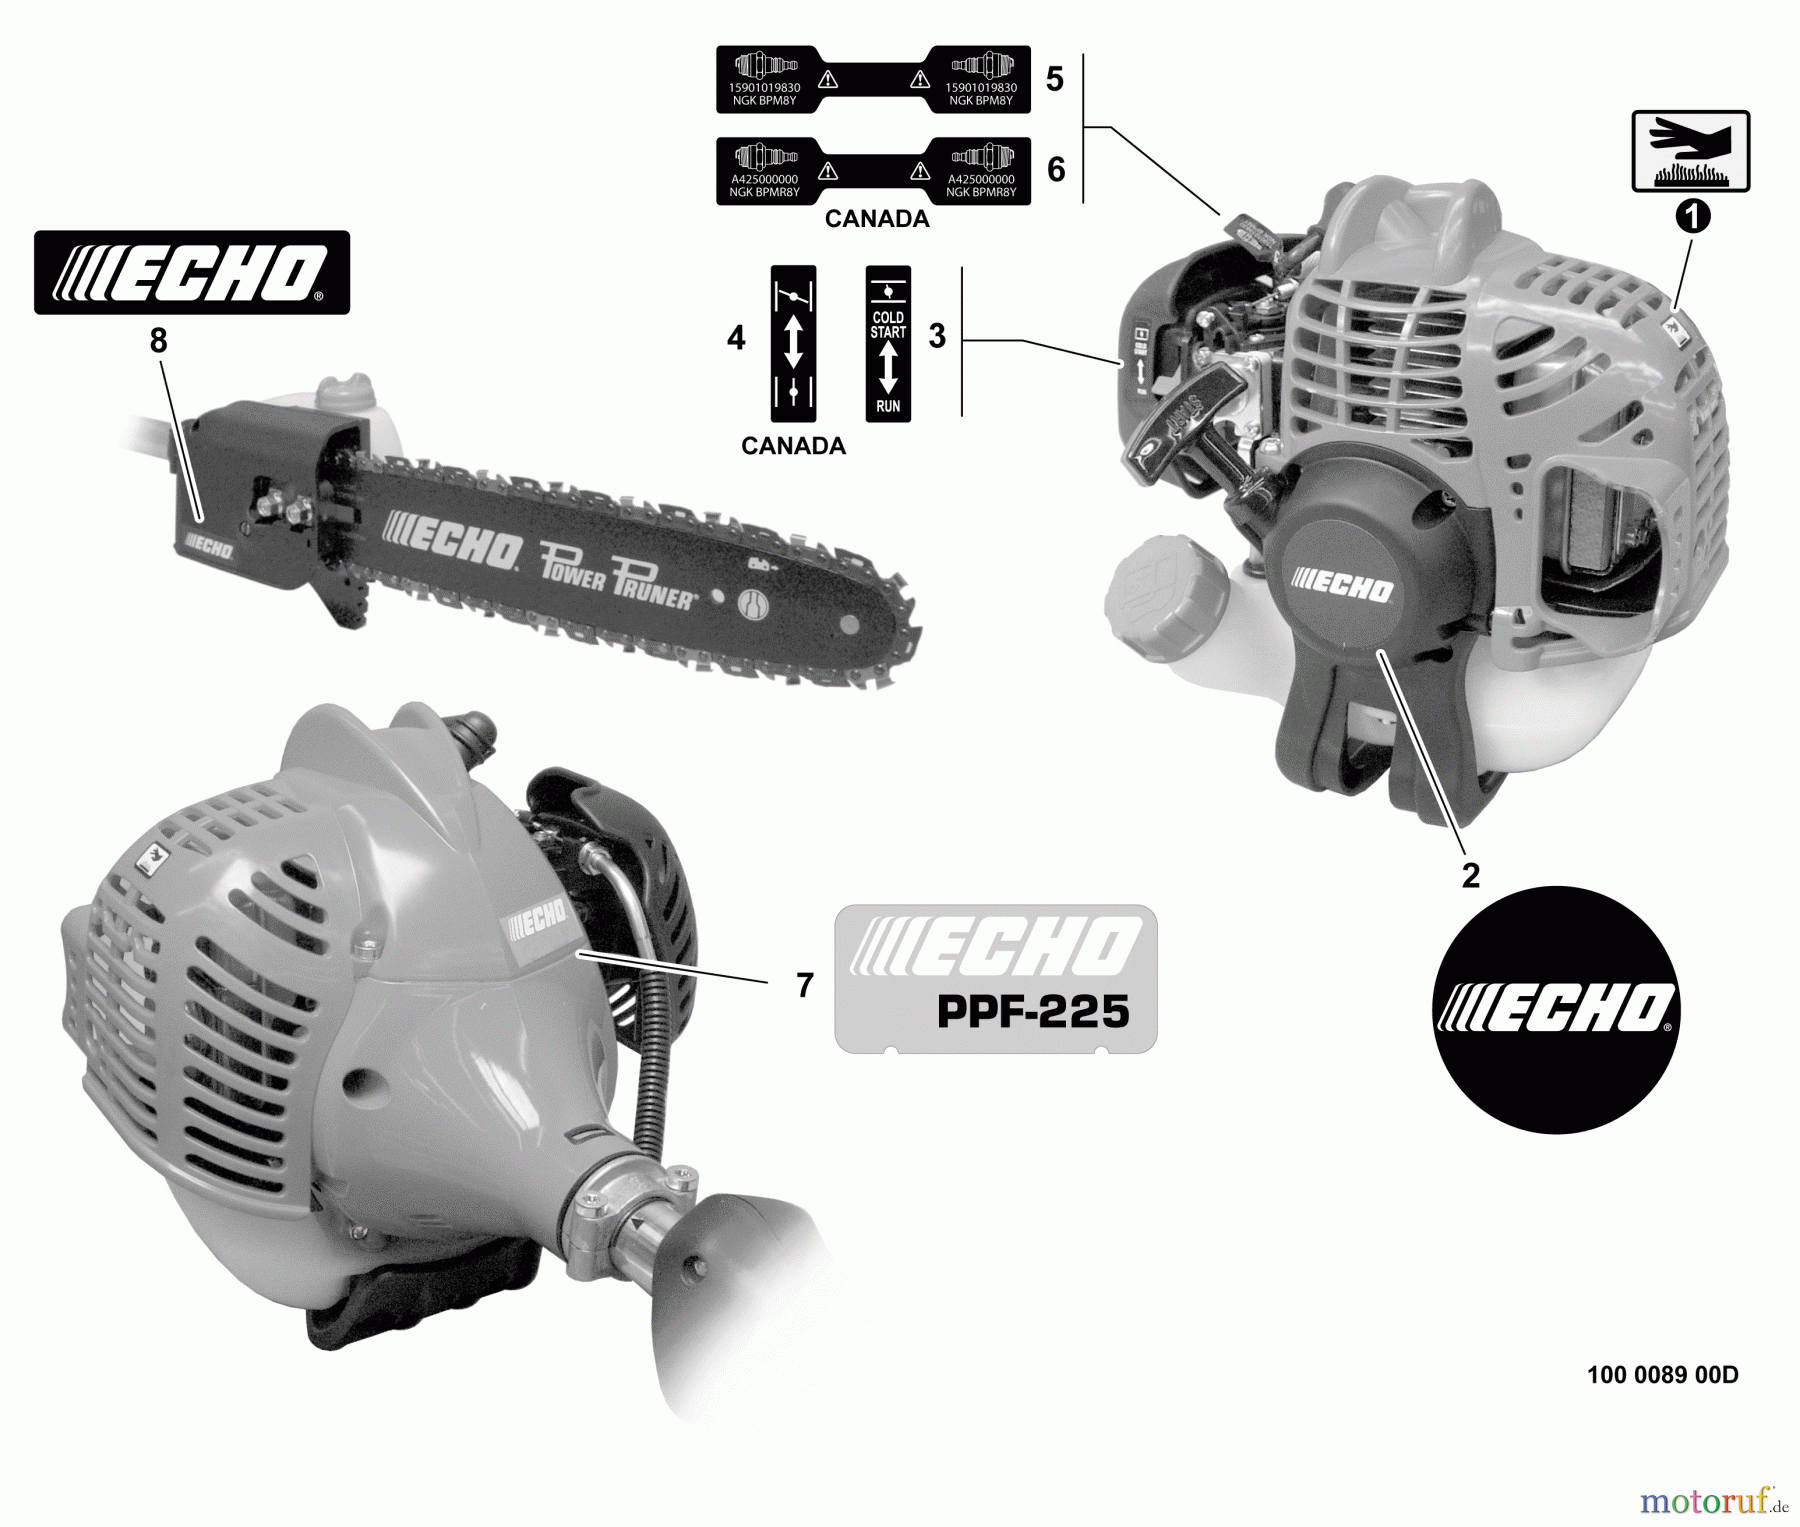  Echo Hochentaster PPF-225 - Echo Pole Saw / Pruner, S/N: S63212001001 - S63212999999 Labels